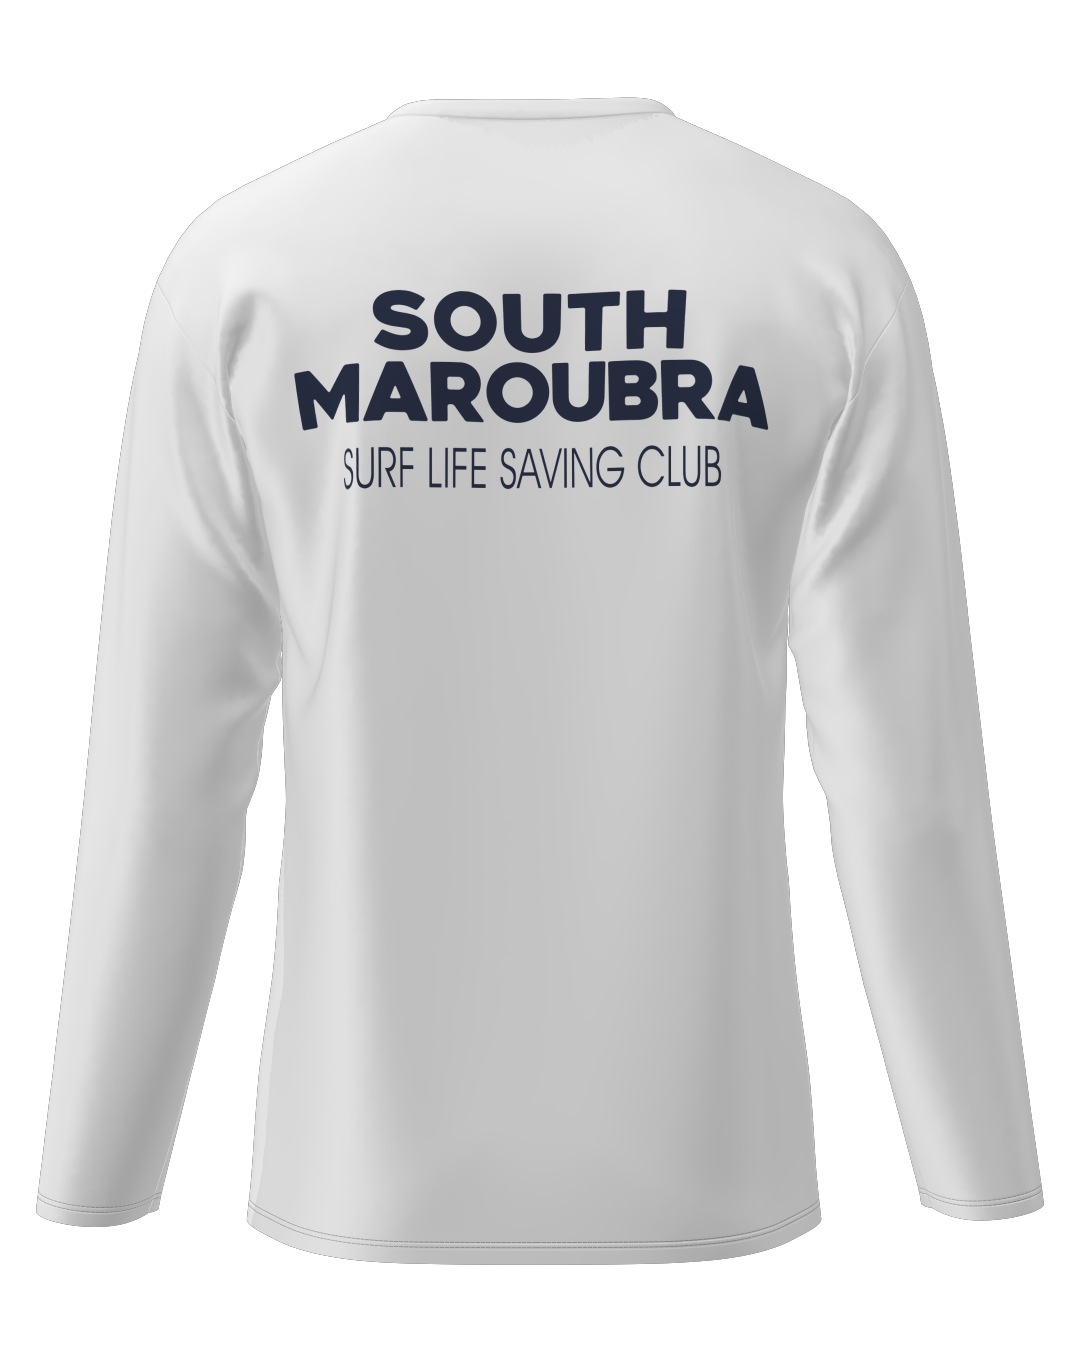 South Maroubra SLSC Long Sleeve Cotton shirt - V- Neck